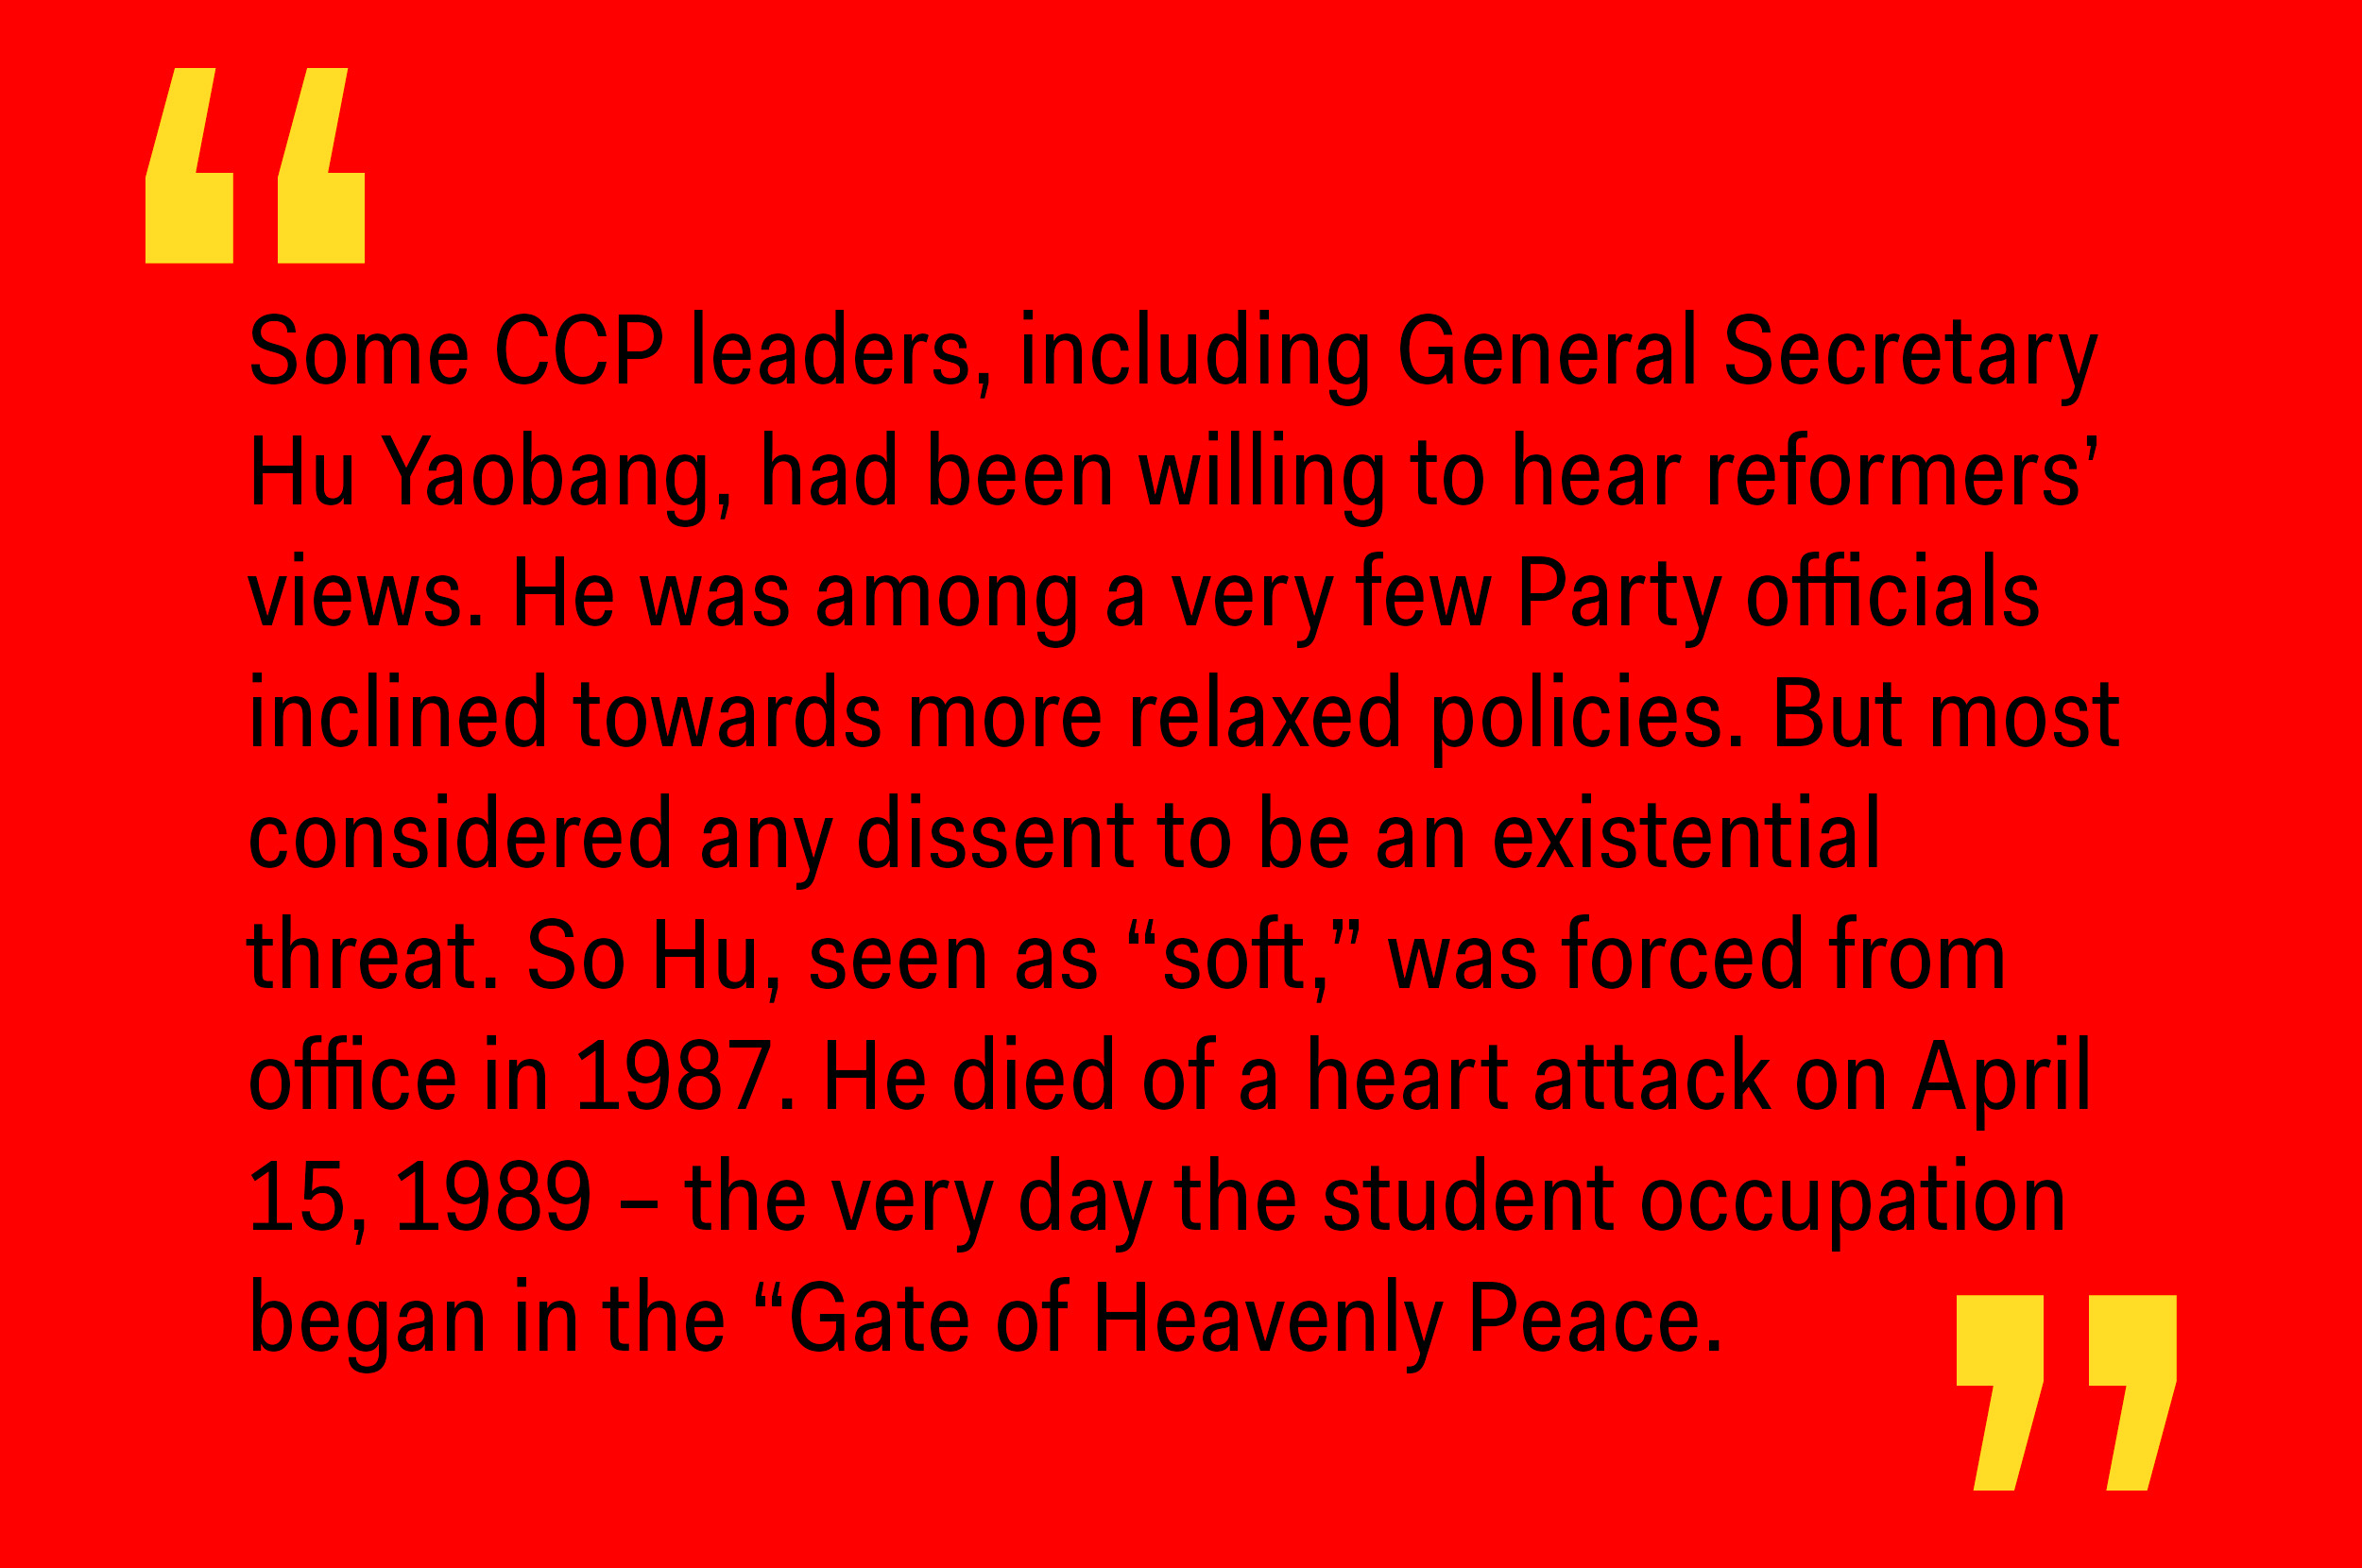 Tiananmen Square Revisited